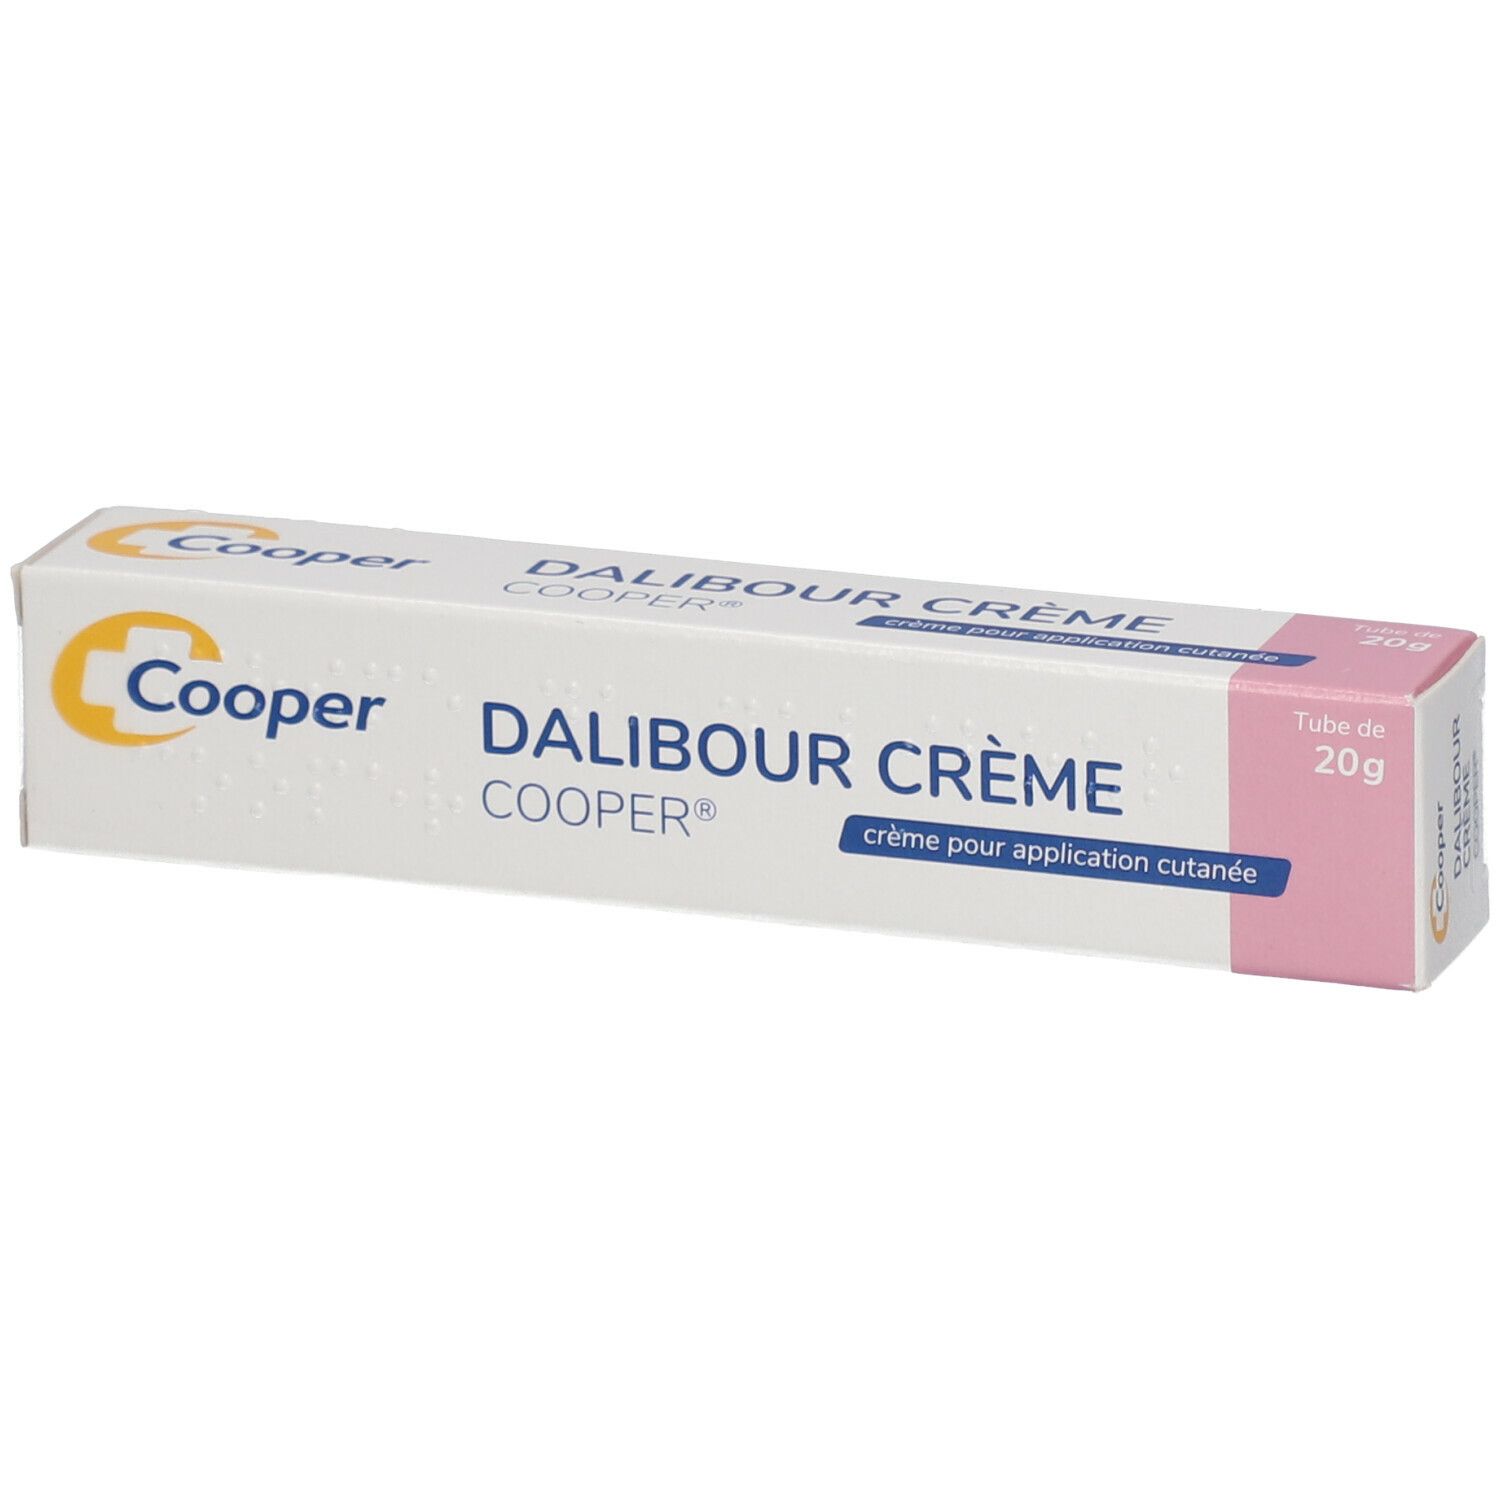 Dalibour Crème